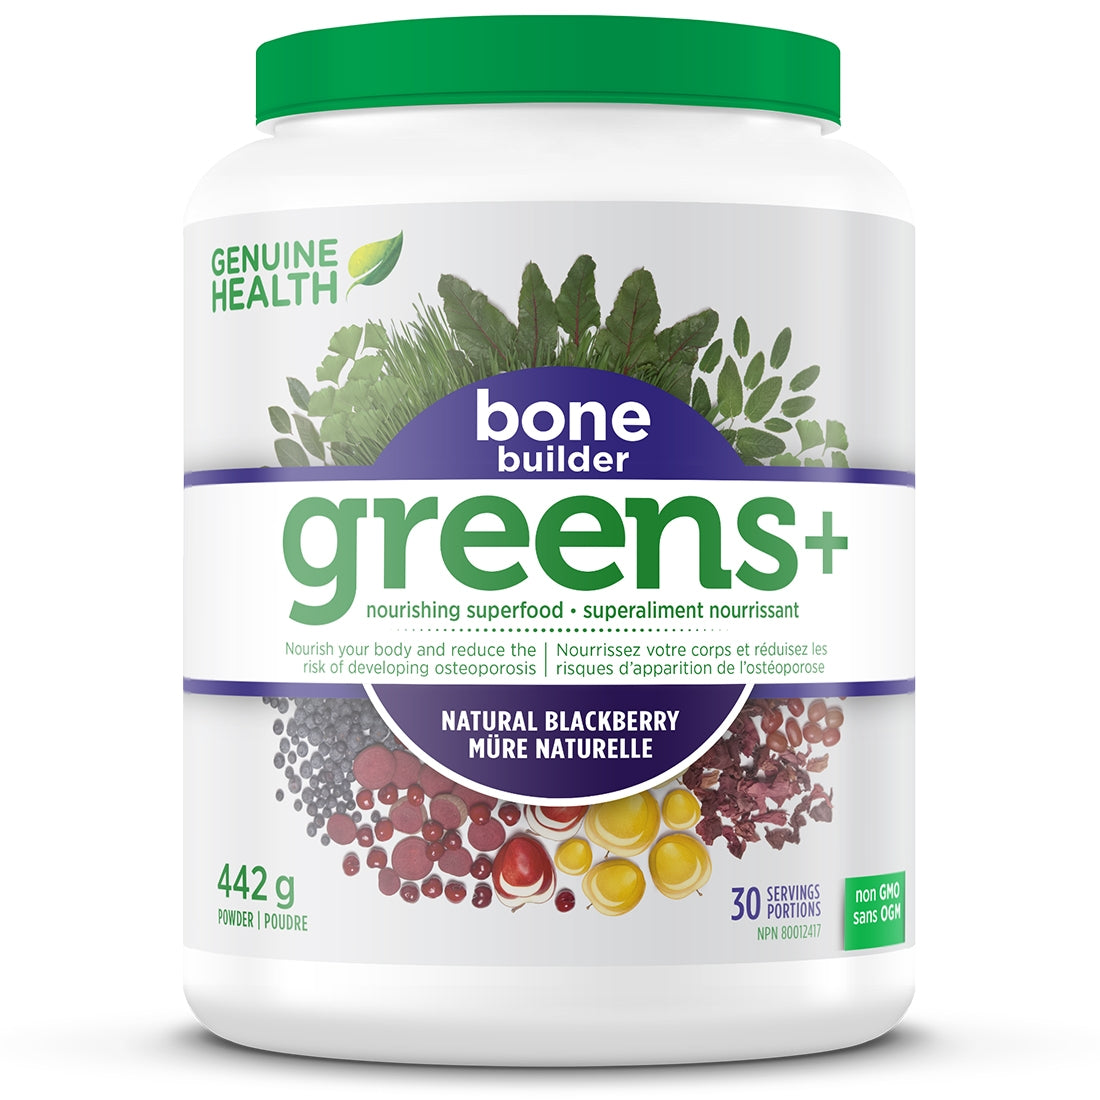 Genuine Health Greens+ Bone Builder